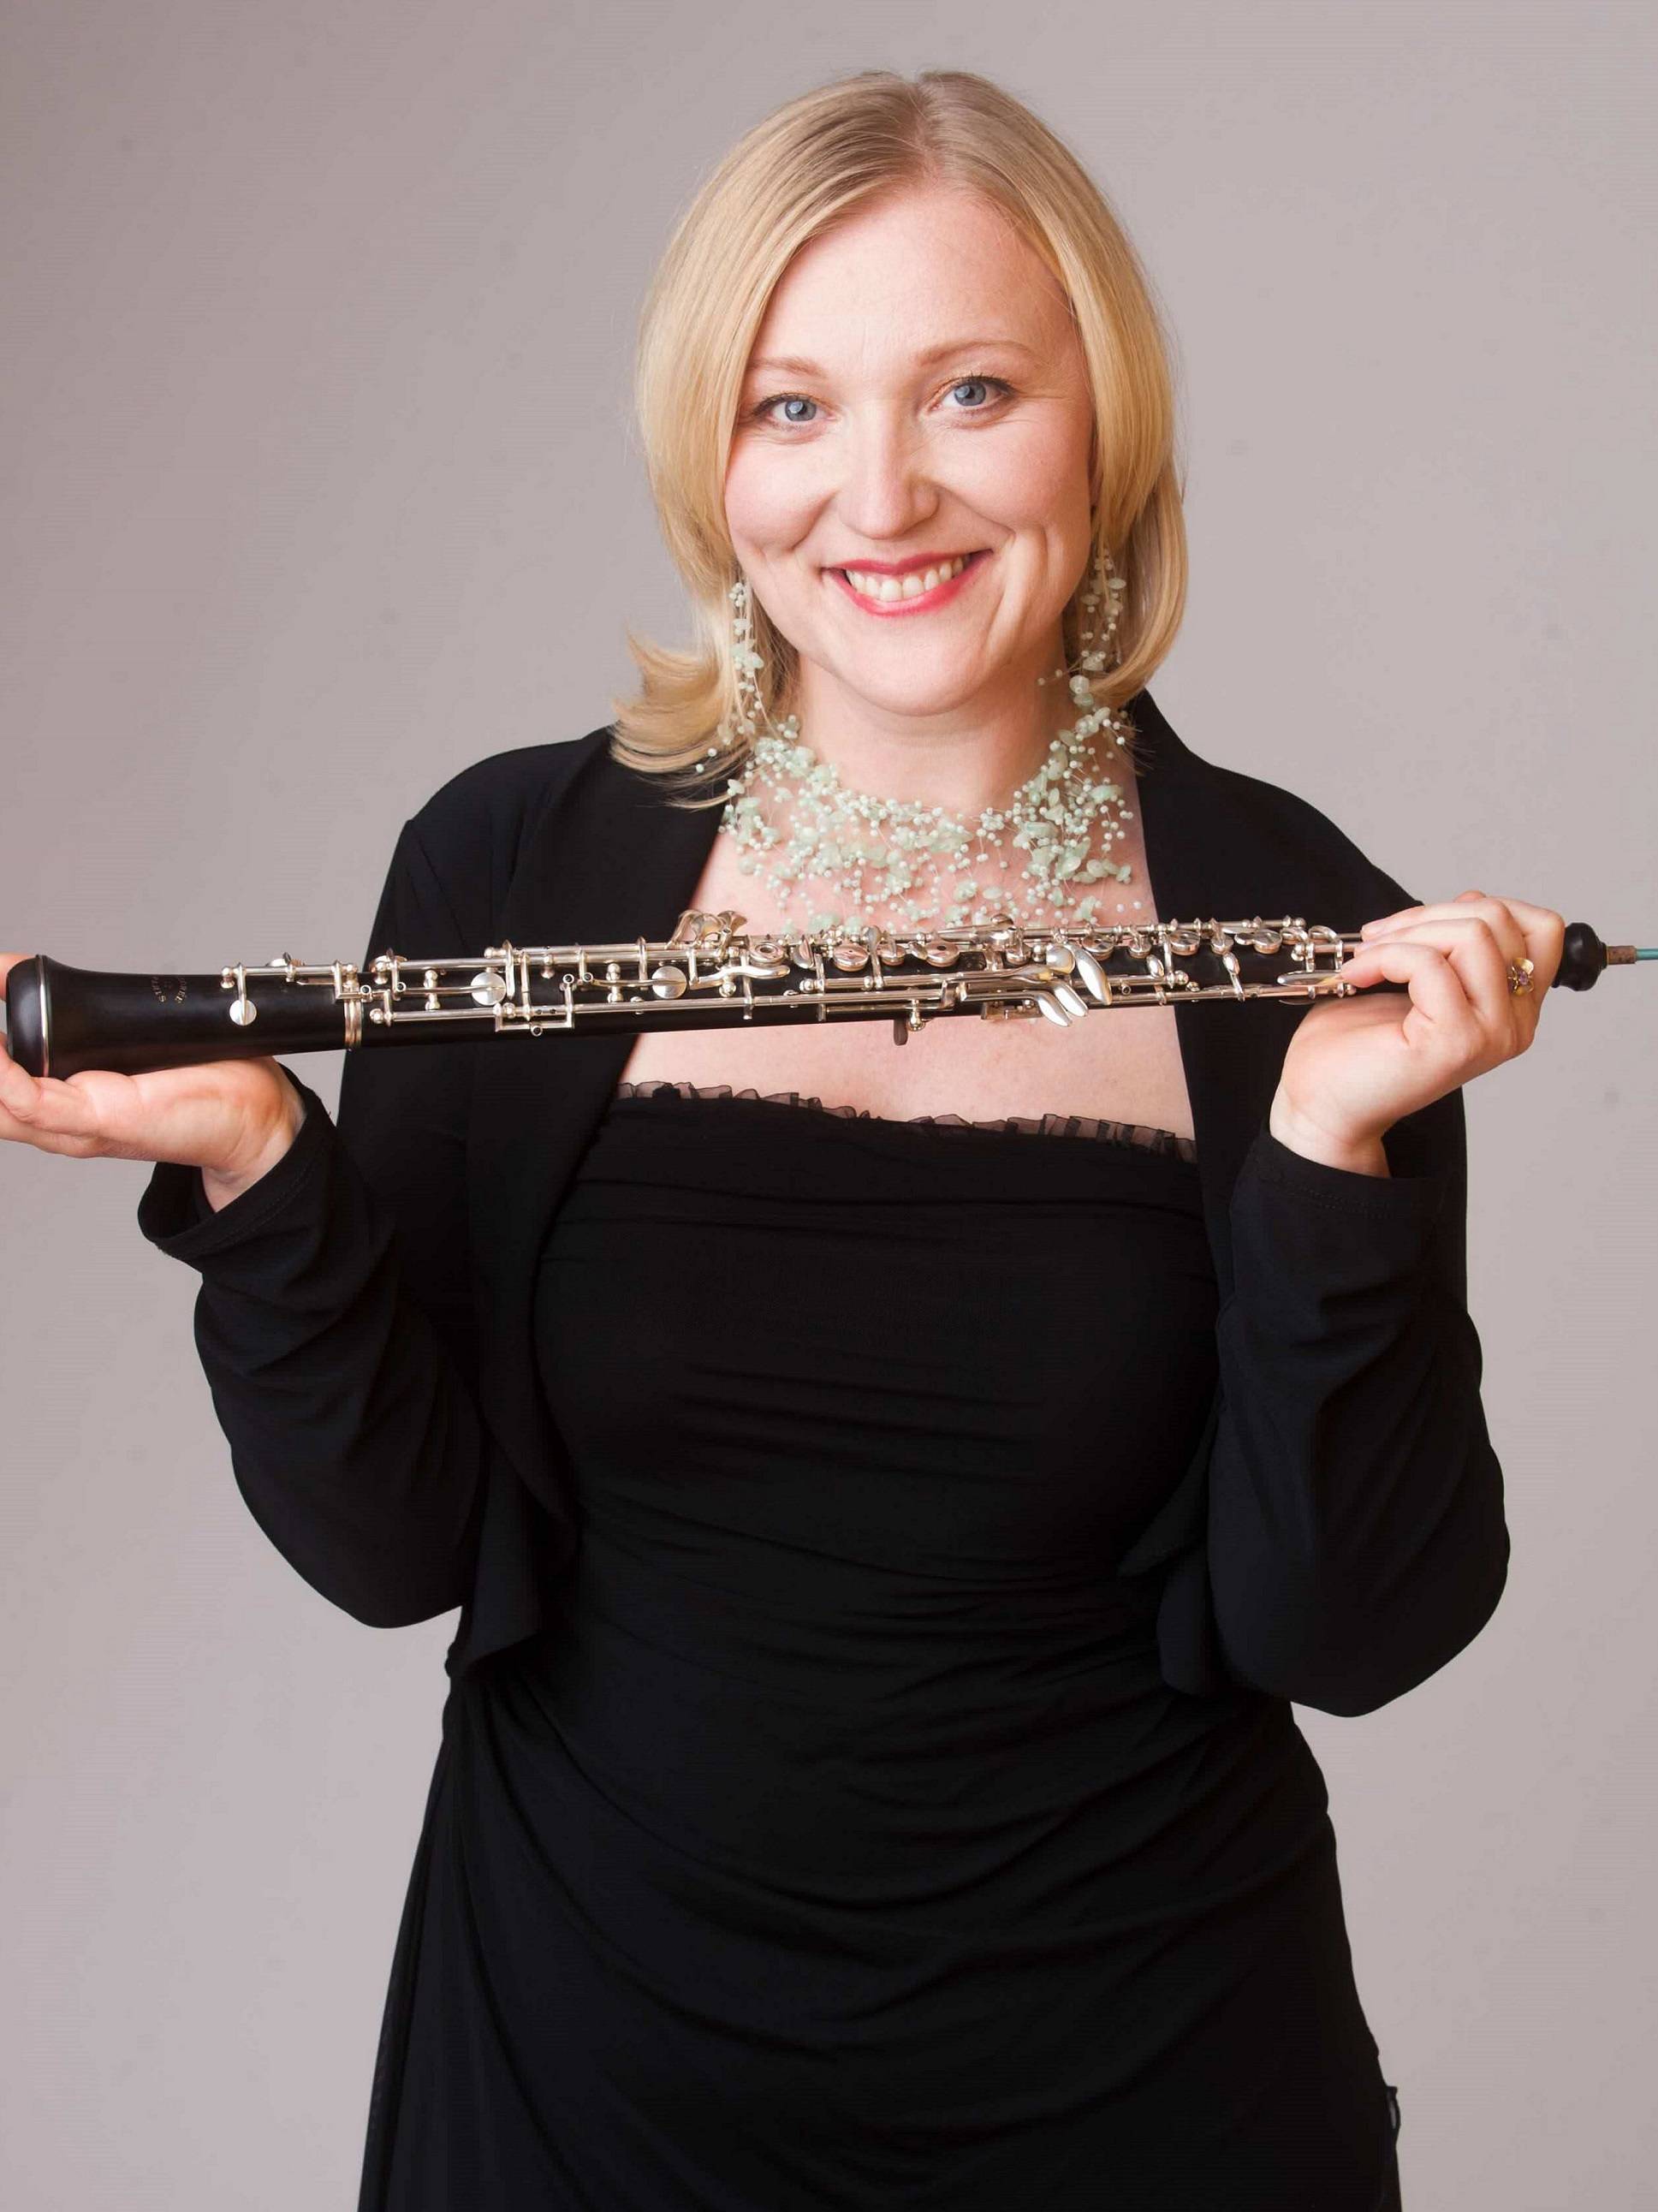 Marlen Vavrikova in a black dress, holding her oboe.